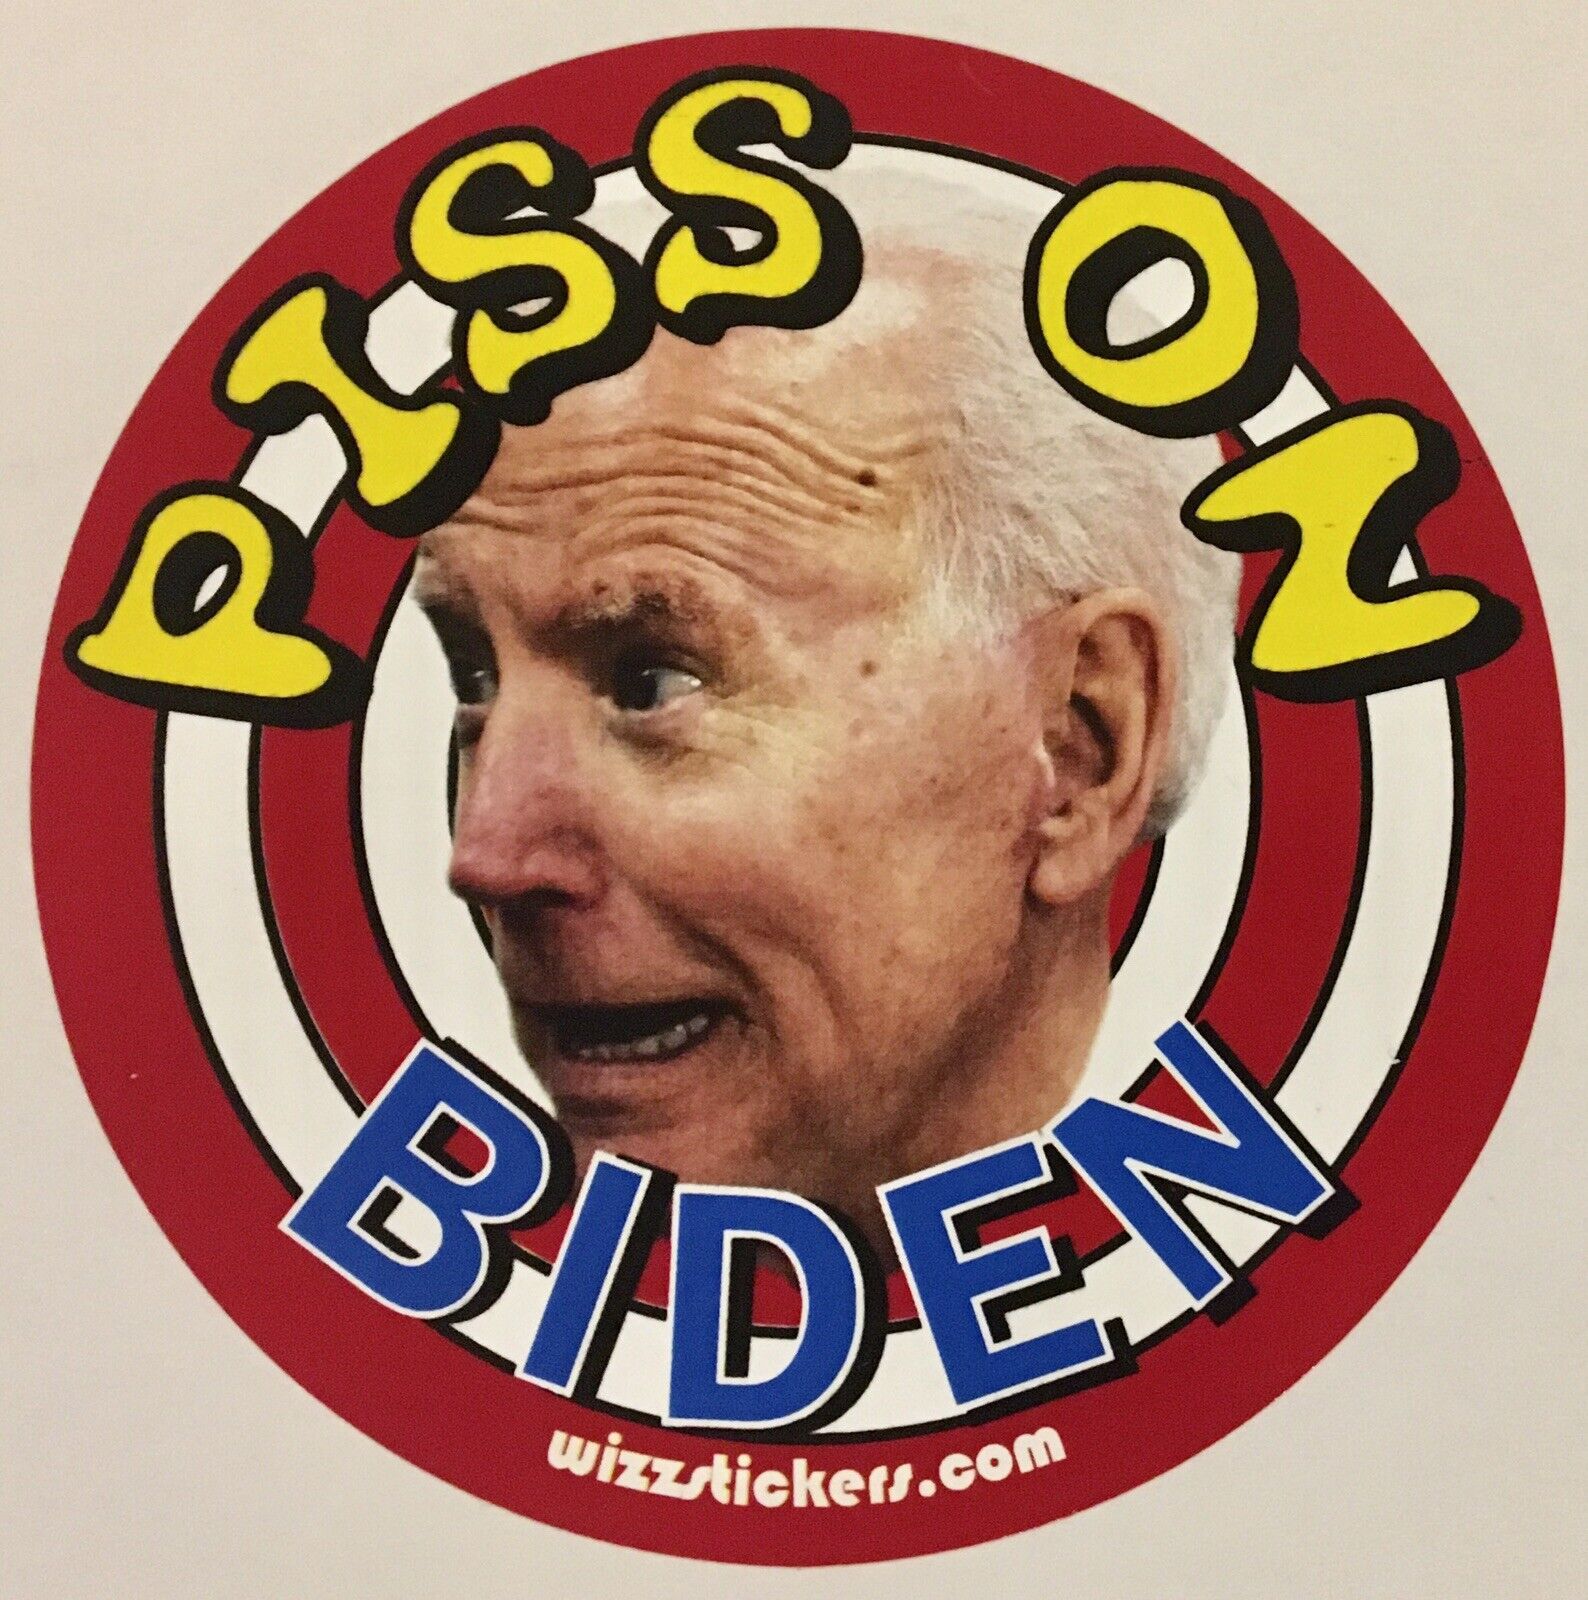 Joe Biden Target Toilet Urinal Sticker (Piss on Biden) by wizzstickers